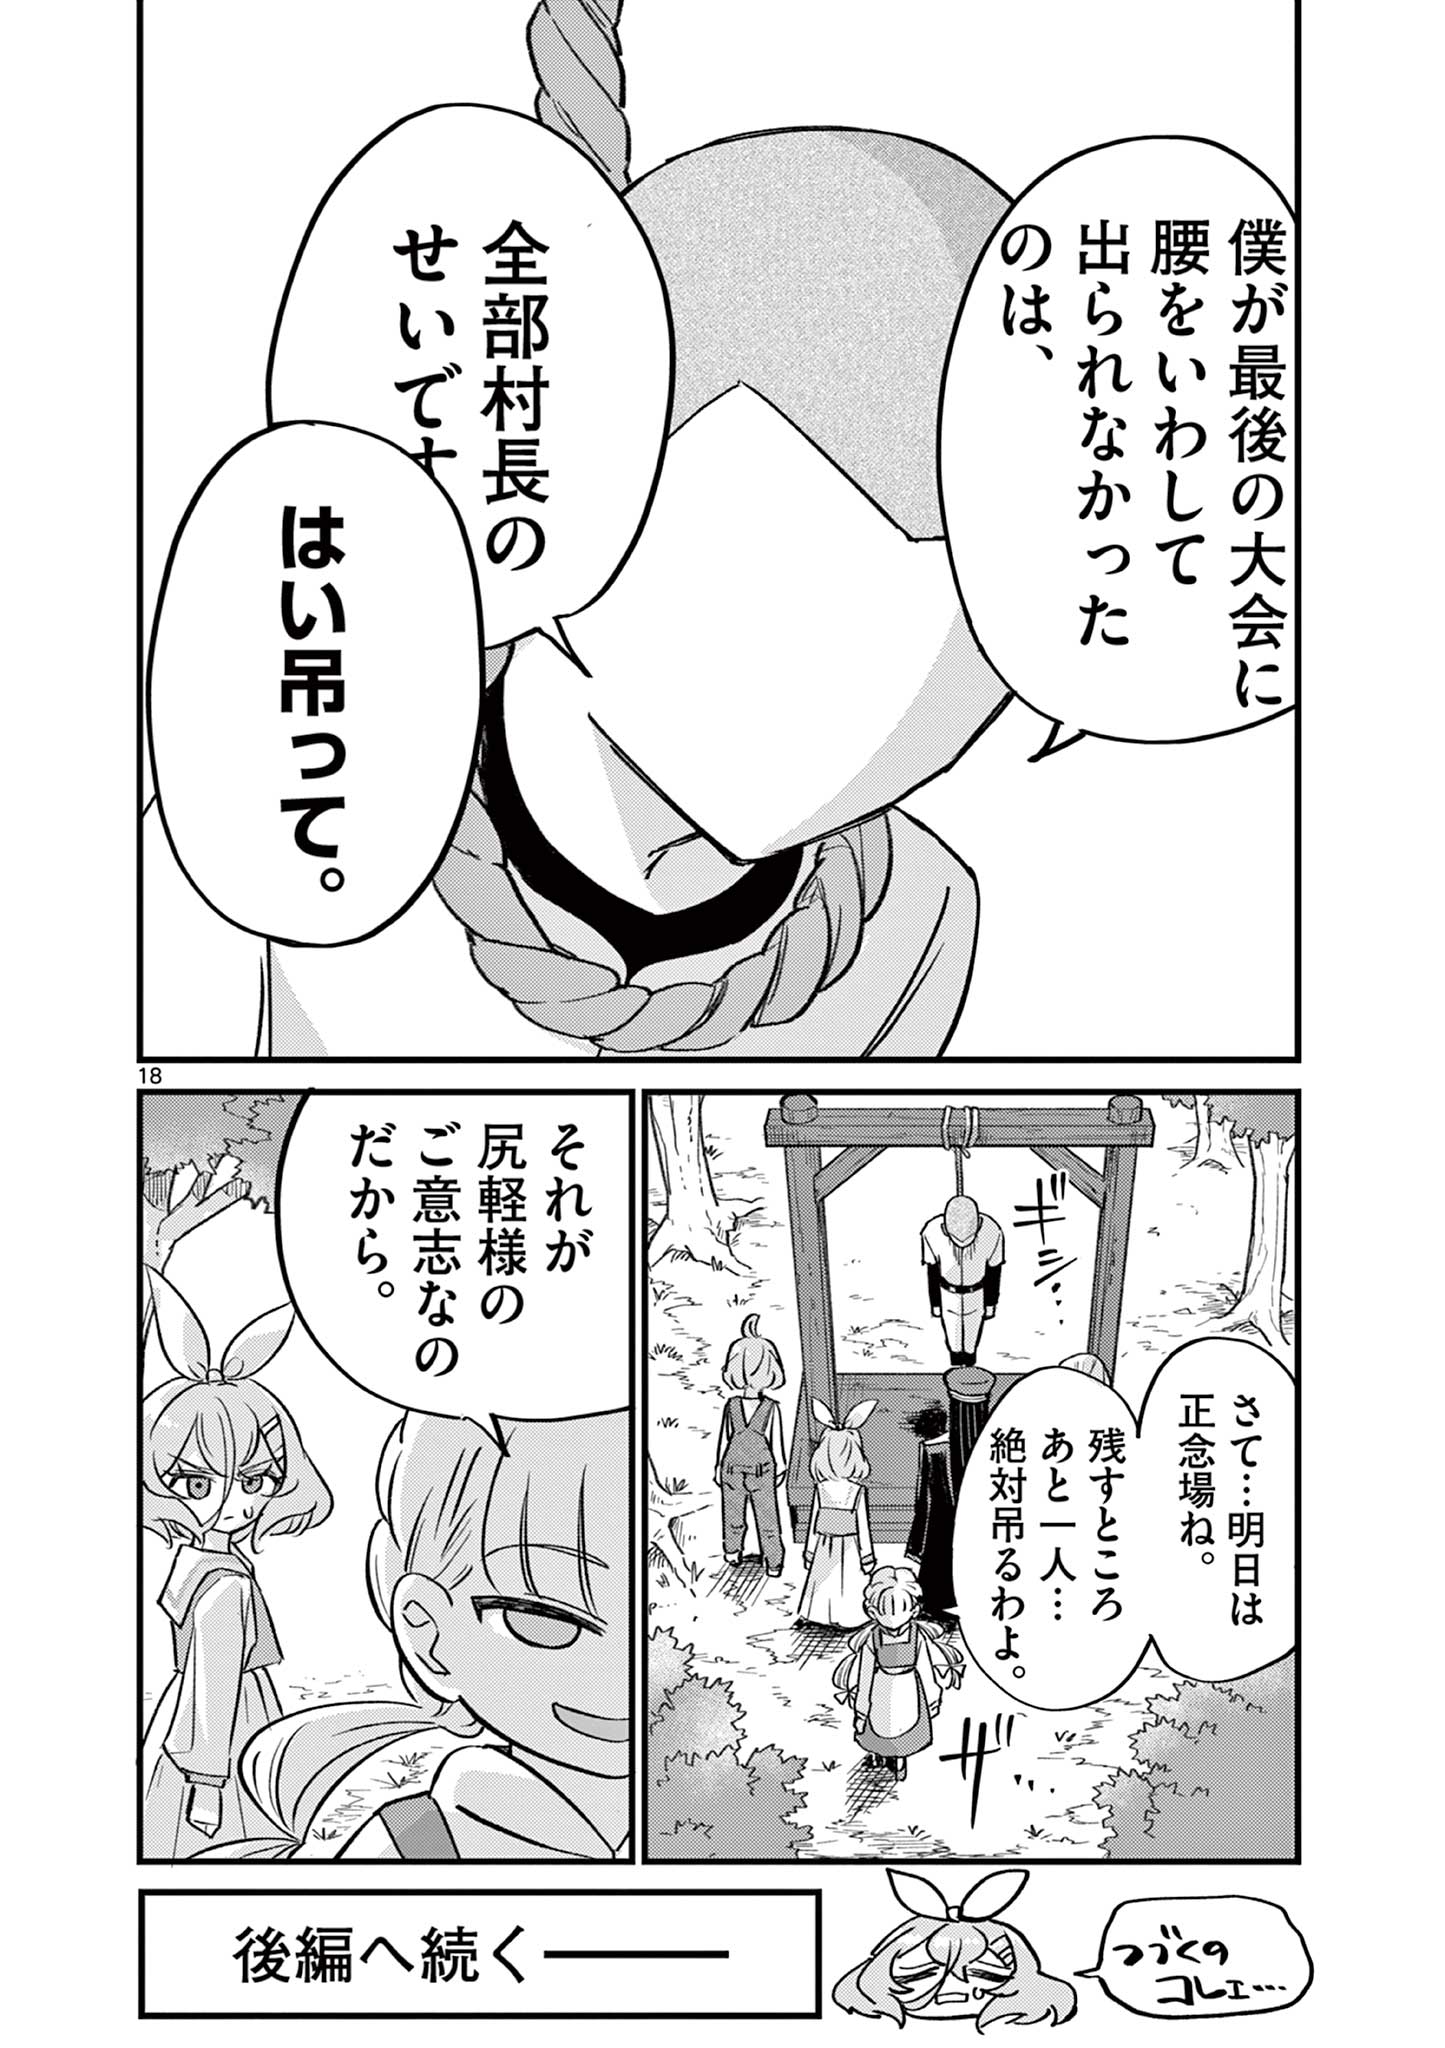 Ranka-chan wa Bitch ni Naritai - Chapter 18 - Page 18